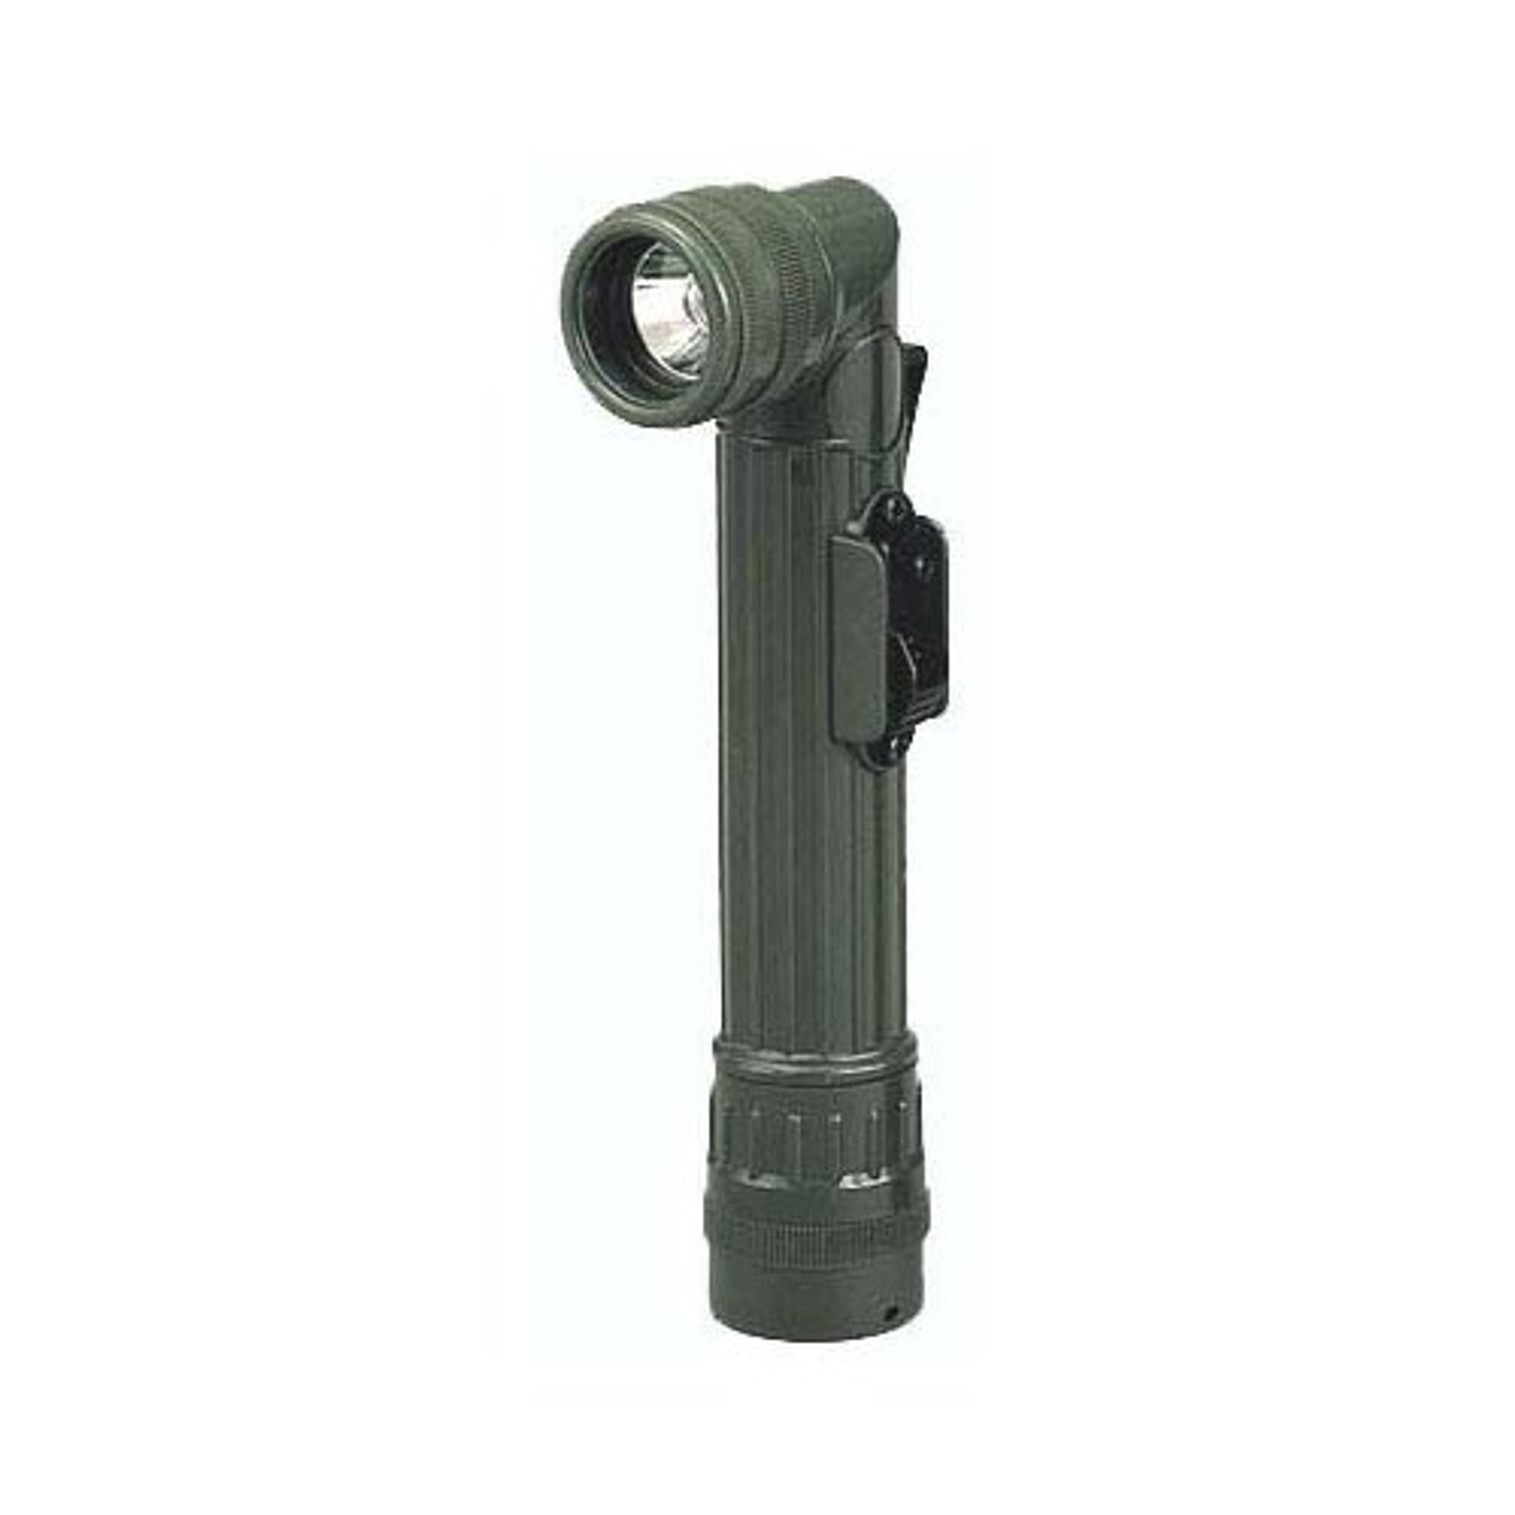 Rothco Mini Army Style Flashlight - Olive Drab